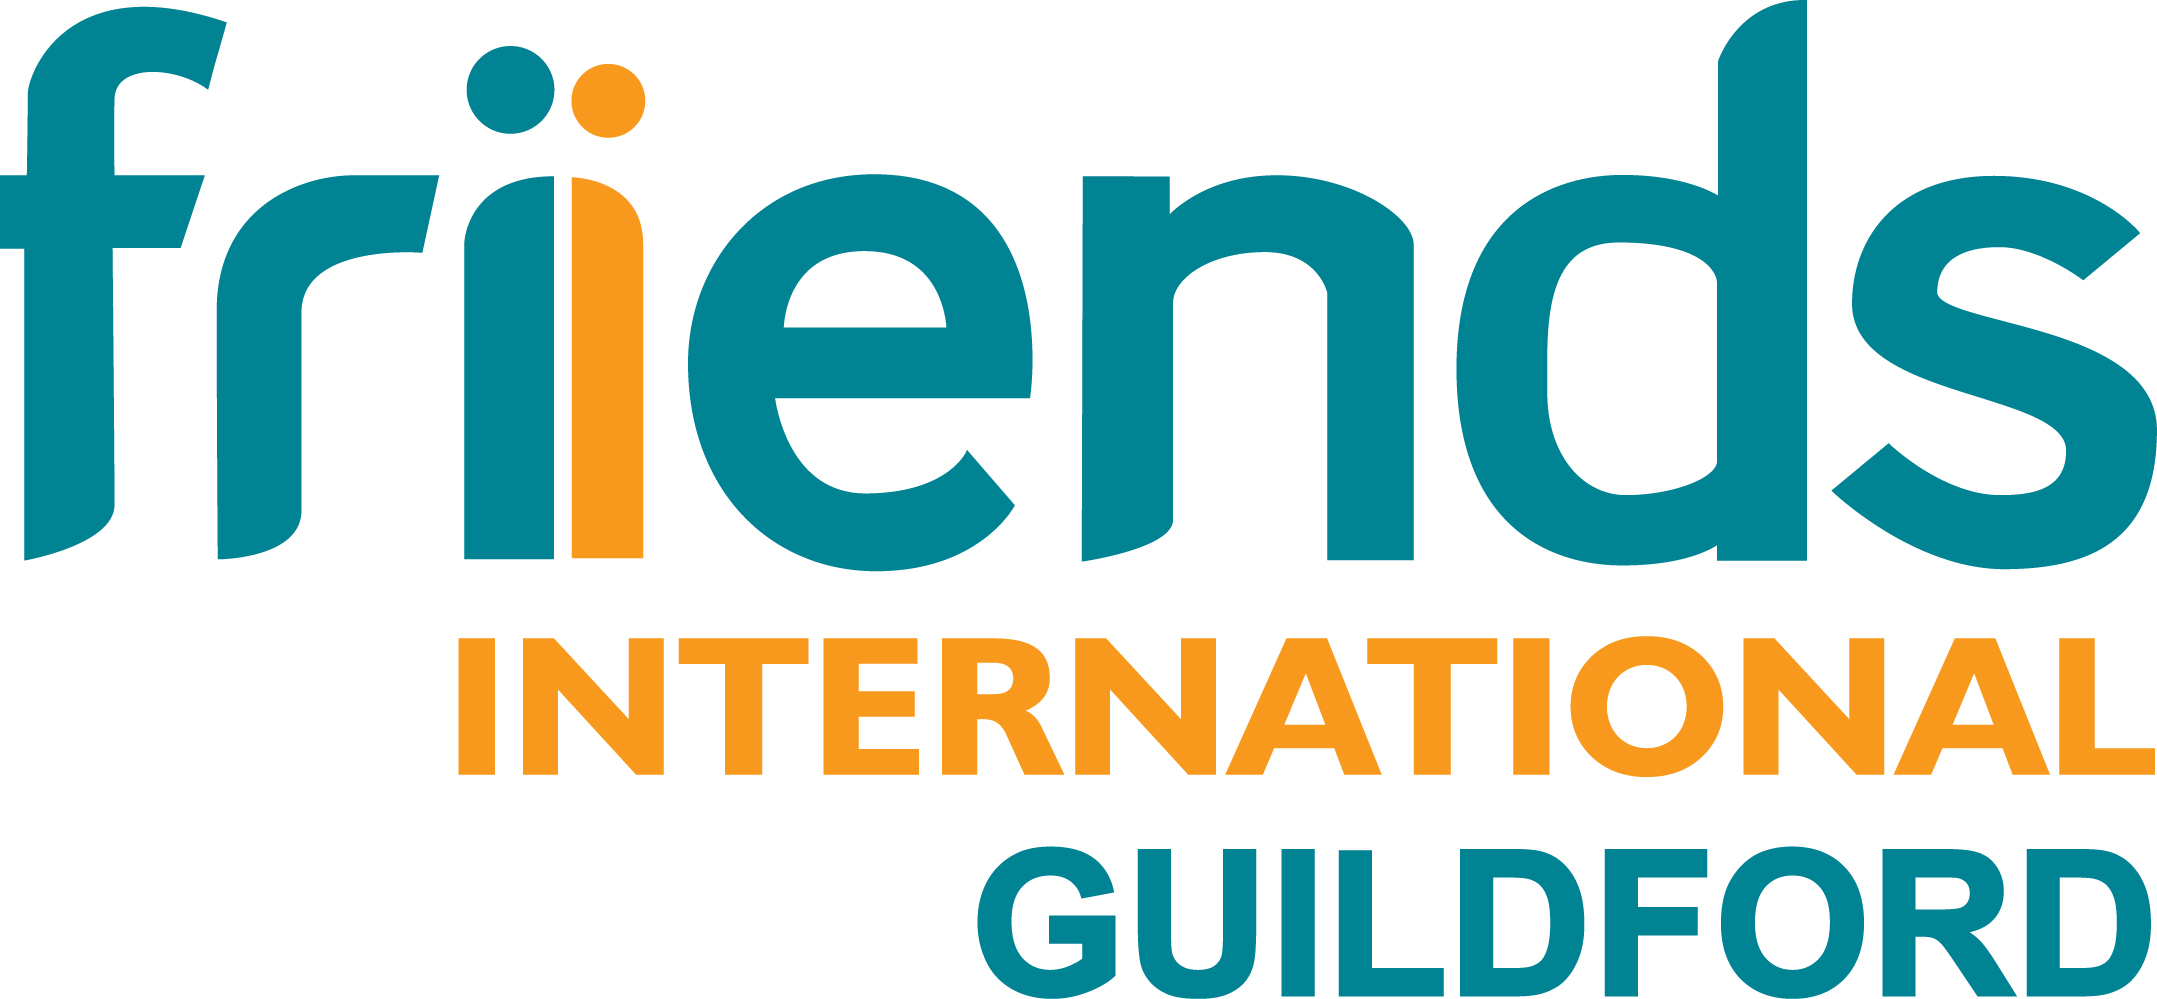 Guildford friends logo-large (